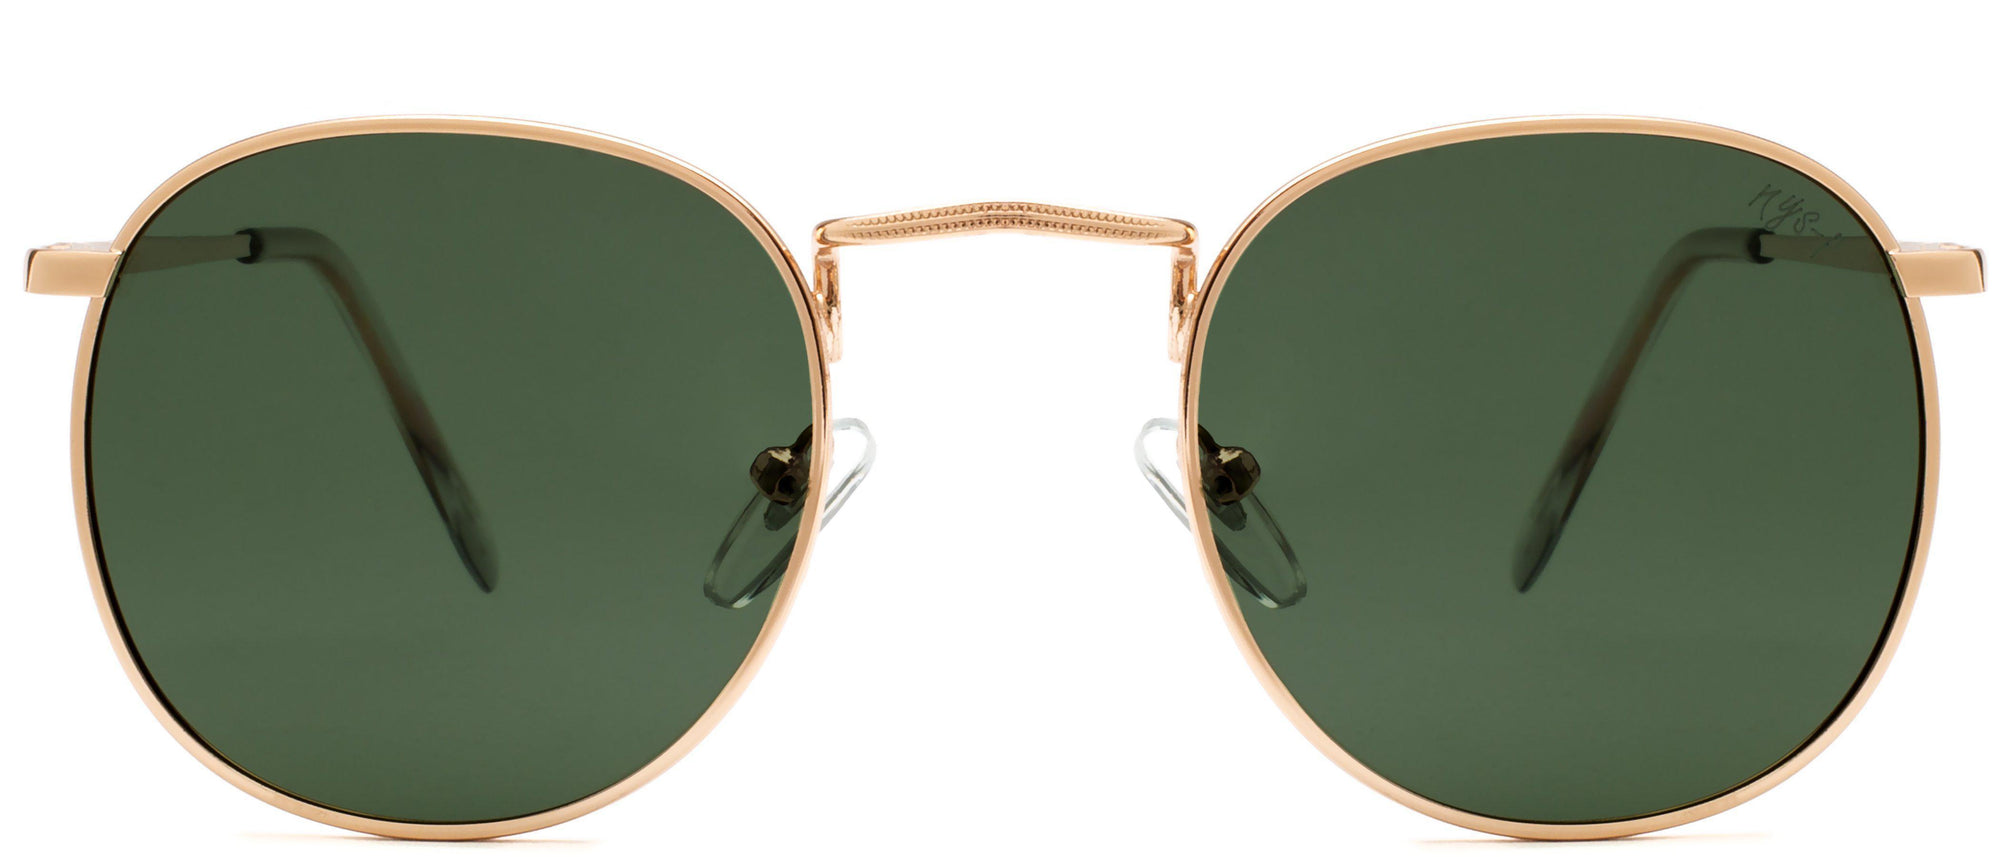 Elton Street Polarized - Sunglasses NYS Collection Eyewear Gold/Green